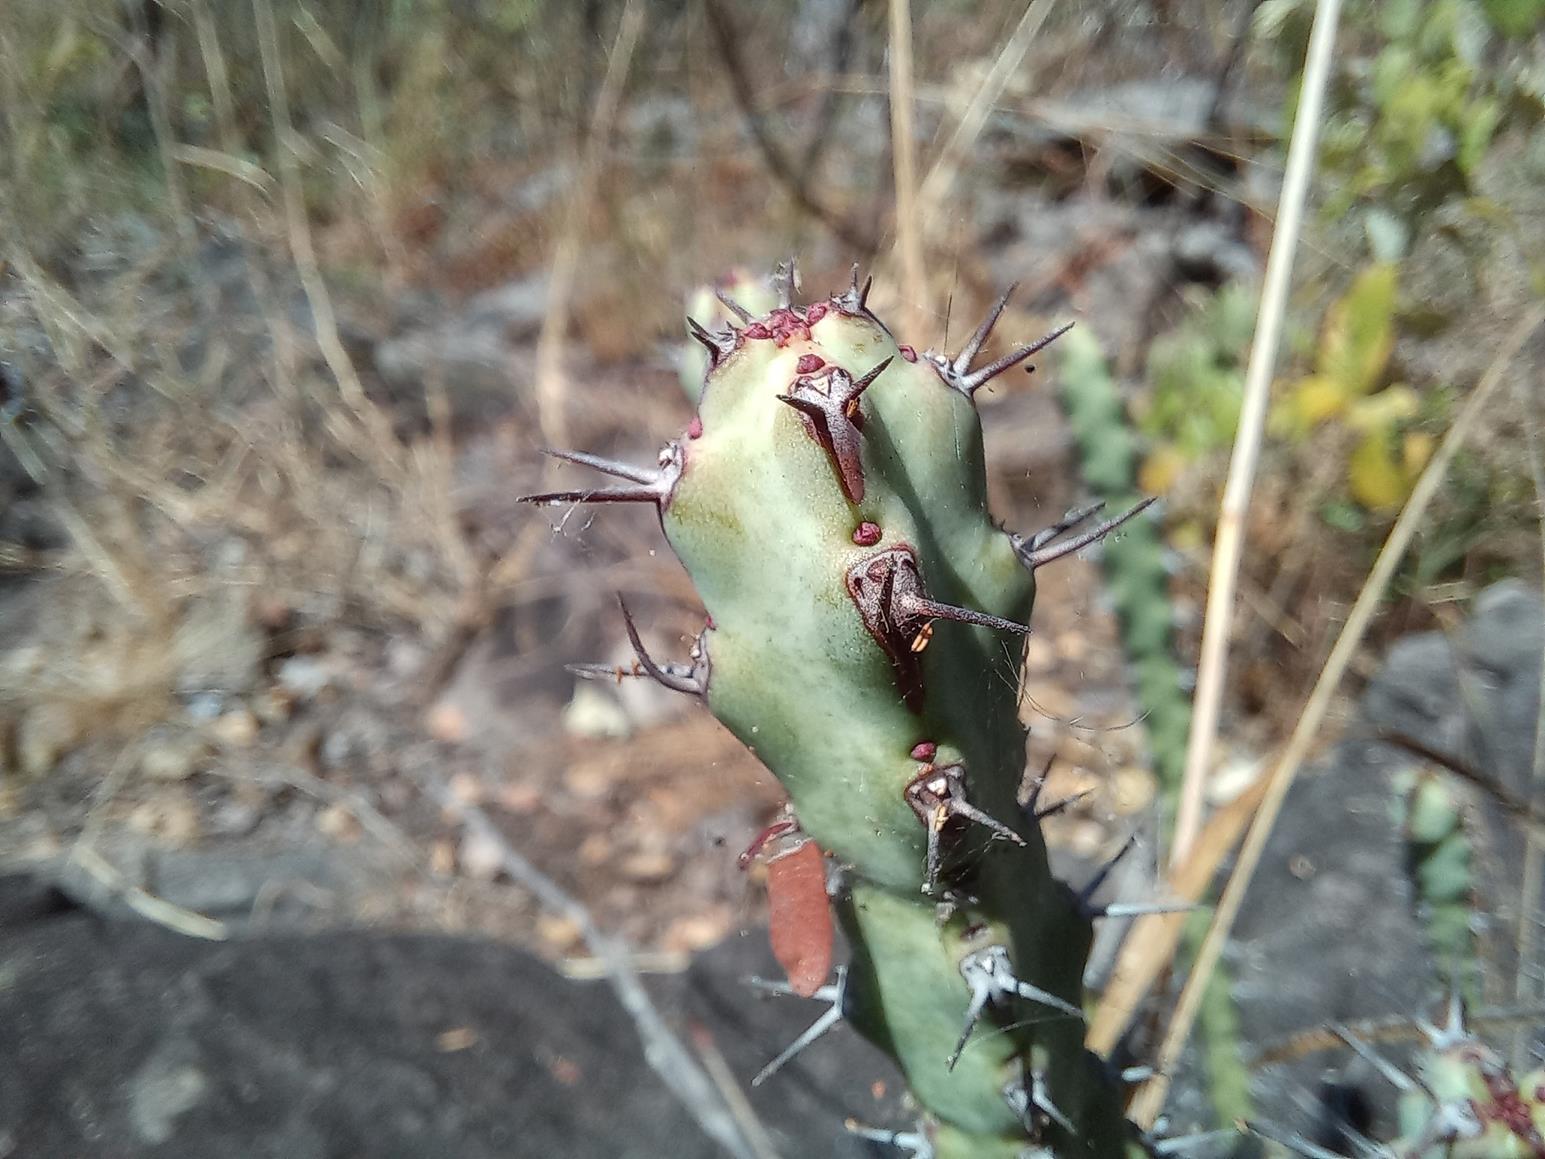 Euphorbia speciosa